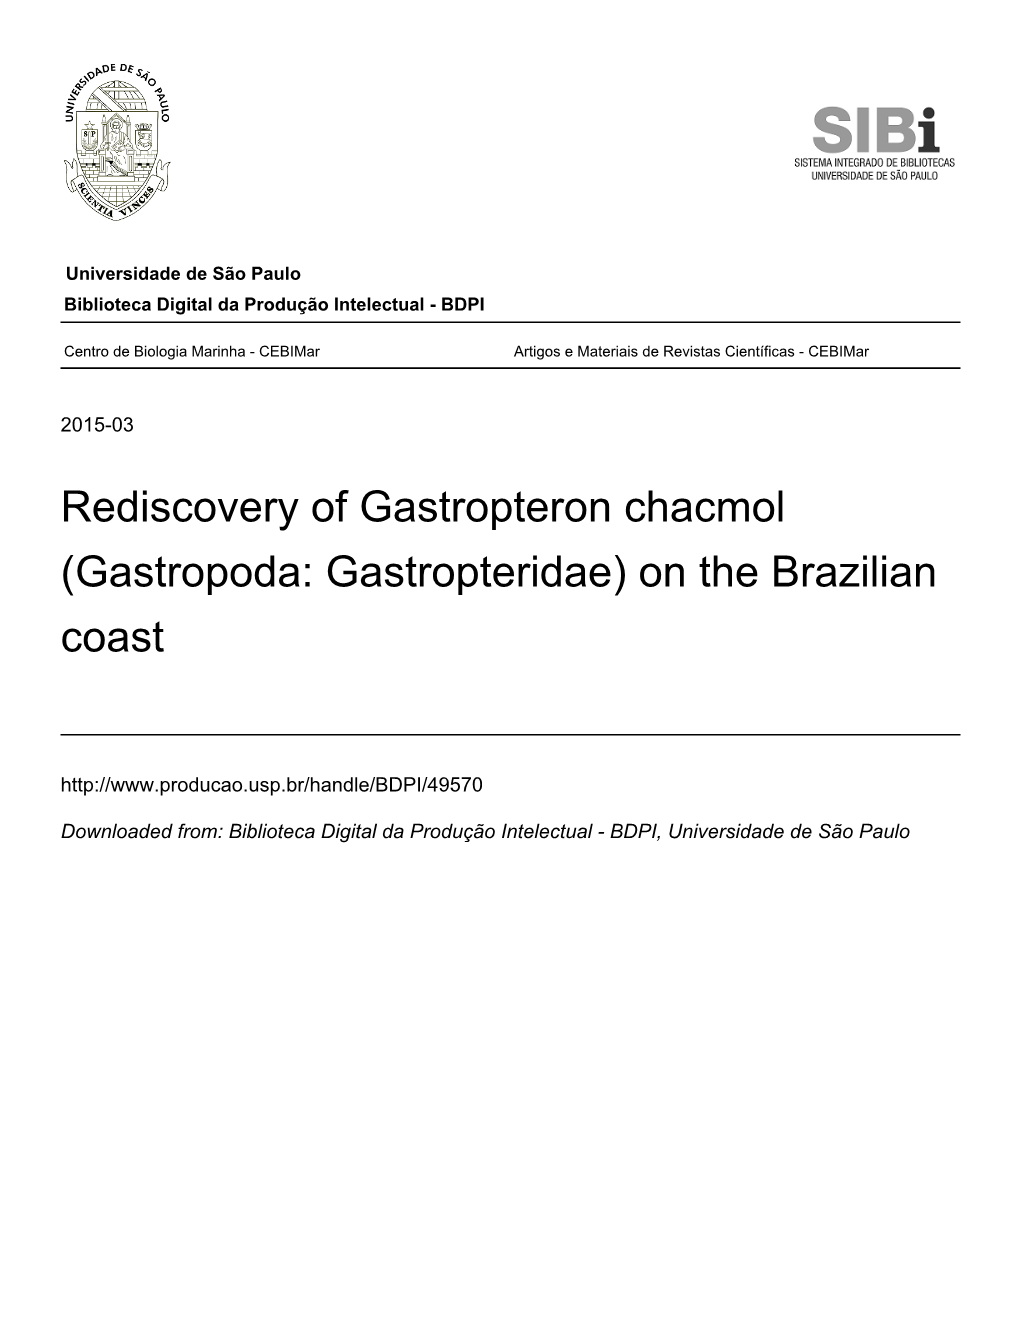 Rediscovery of Gastropteron Chacmol (Gastropoda: Gastropteridae) on the Brazilian Coast